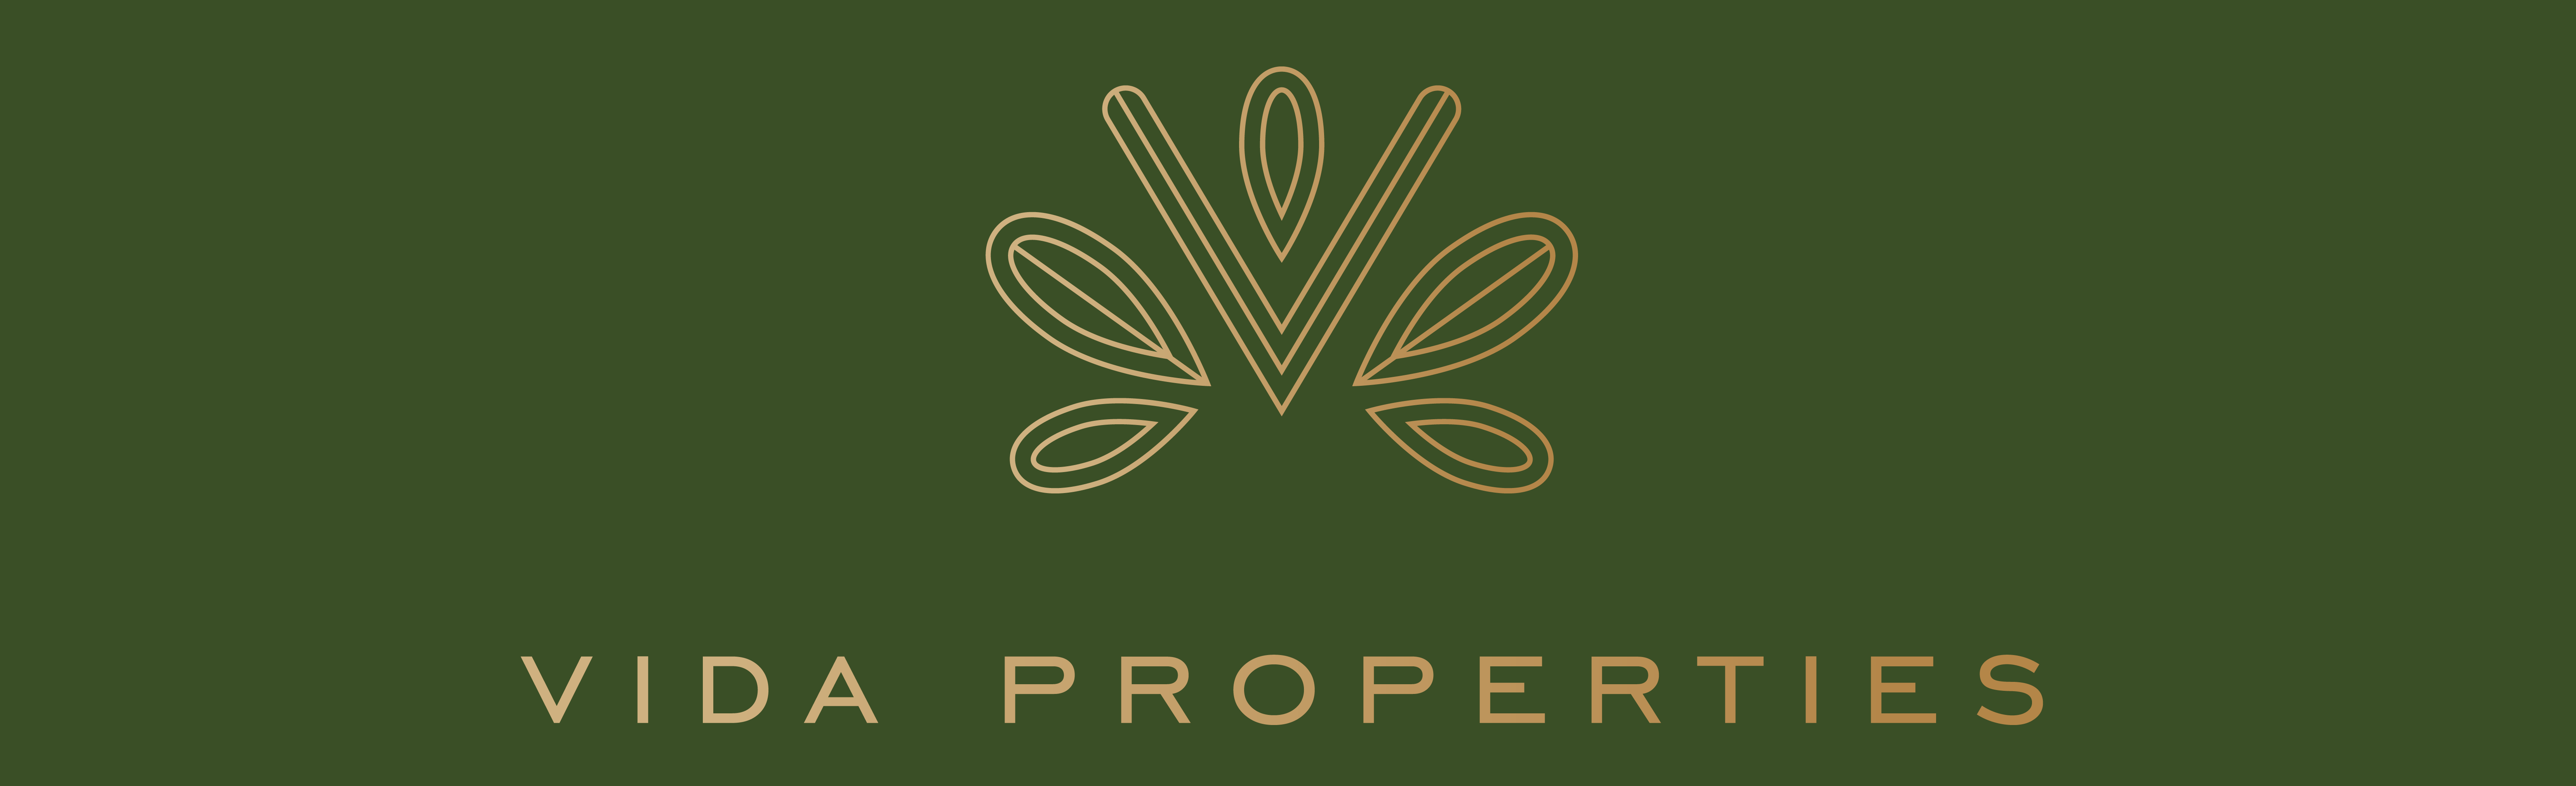 Vida Properties, LLC